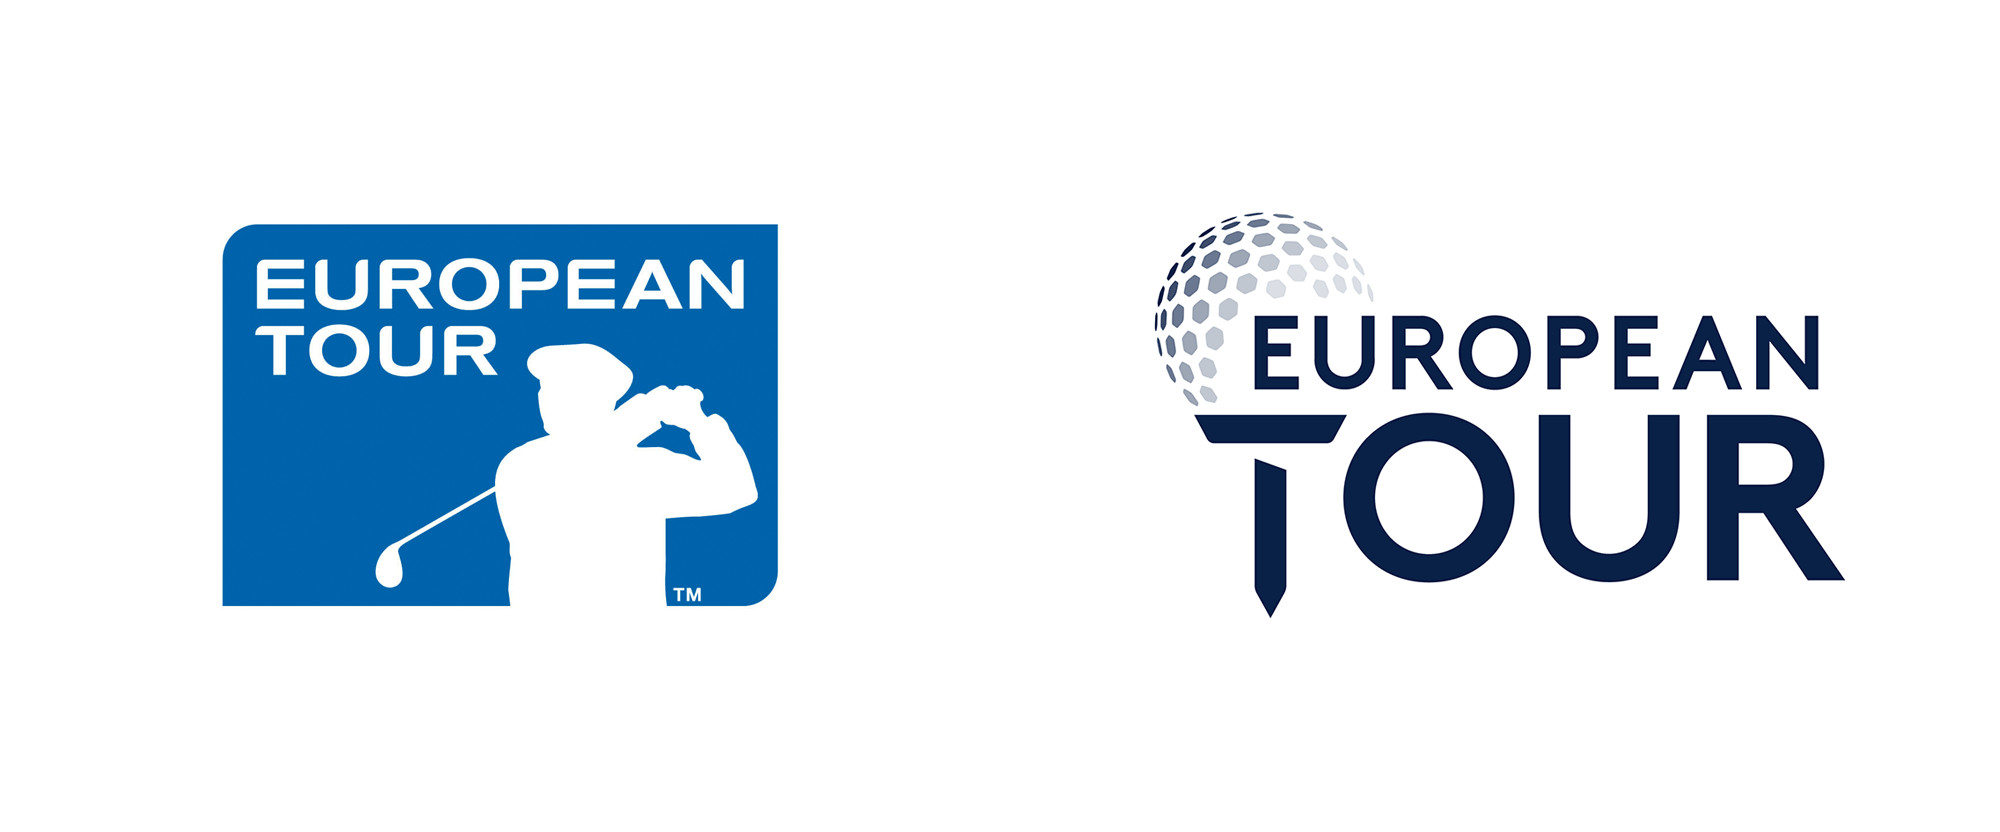 Tour european Europe Vacations